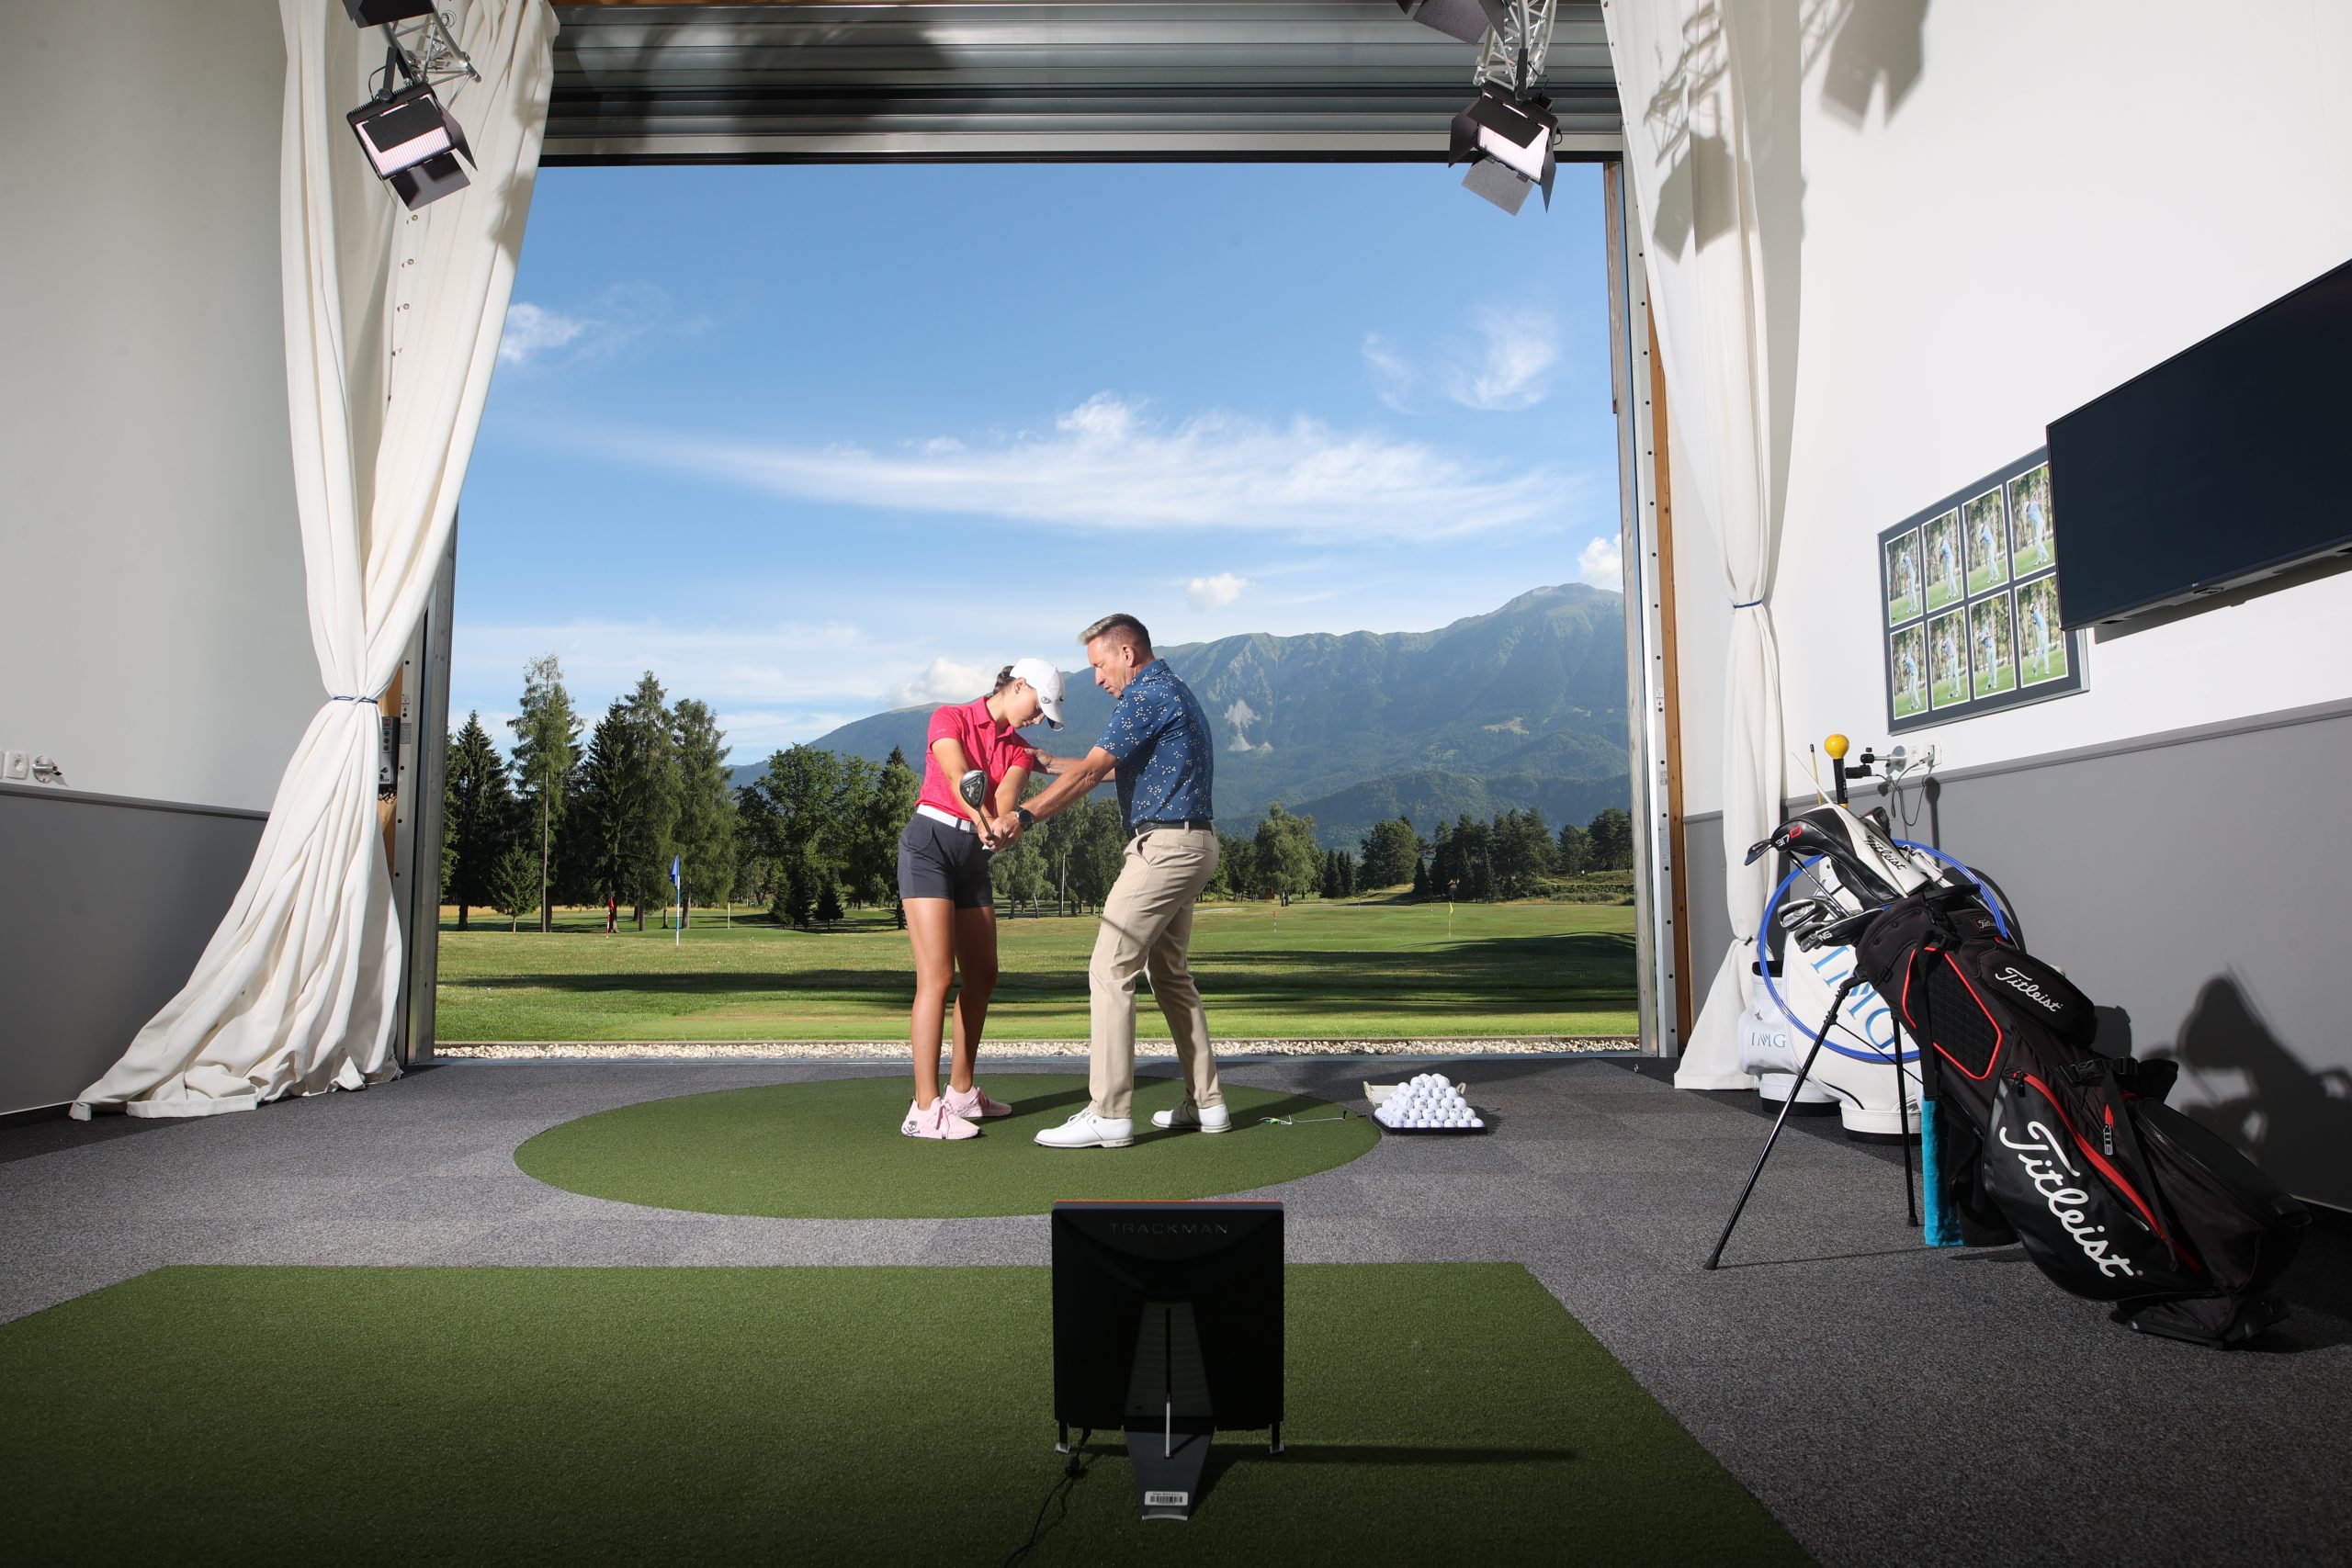 611 - Academy studio PGA lesson, Royal Bled